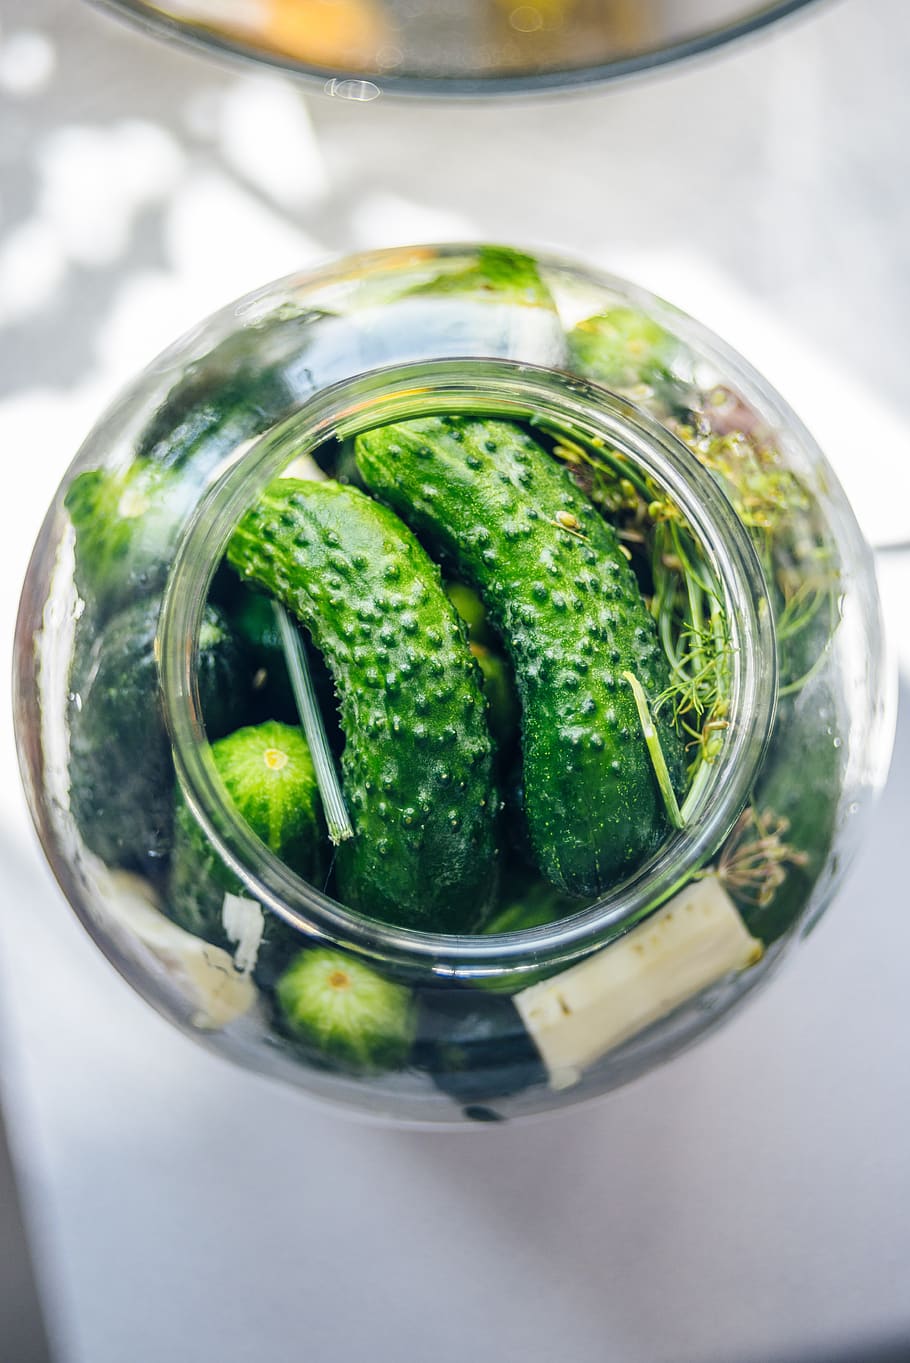 pickled cucumbers, silage, cucumber, cucumber green, cucumbers in a jar, organic cucumbers, cucumbers with horseradish, koper, jar, appetizer